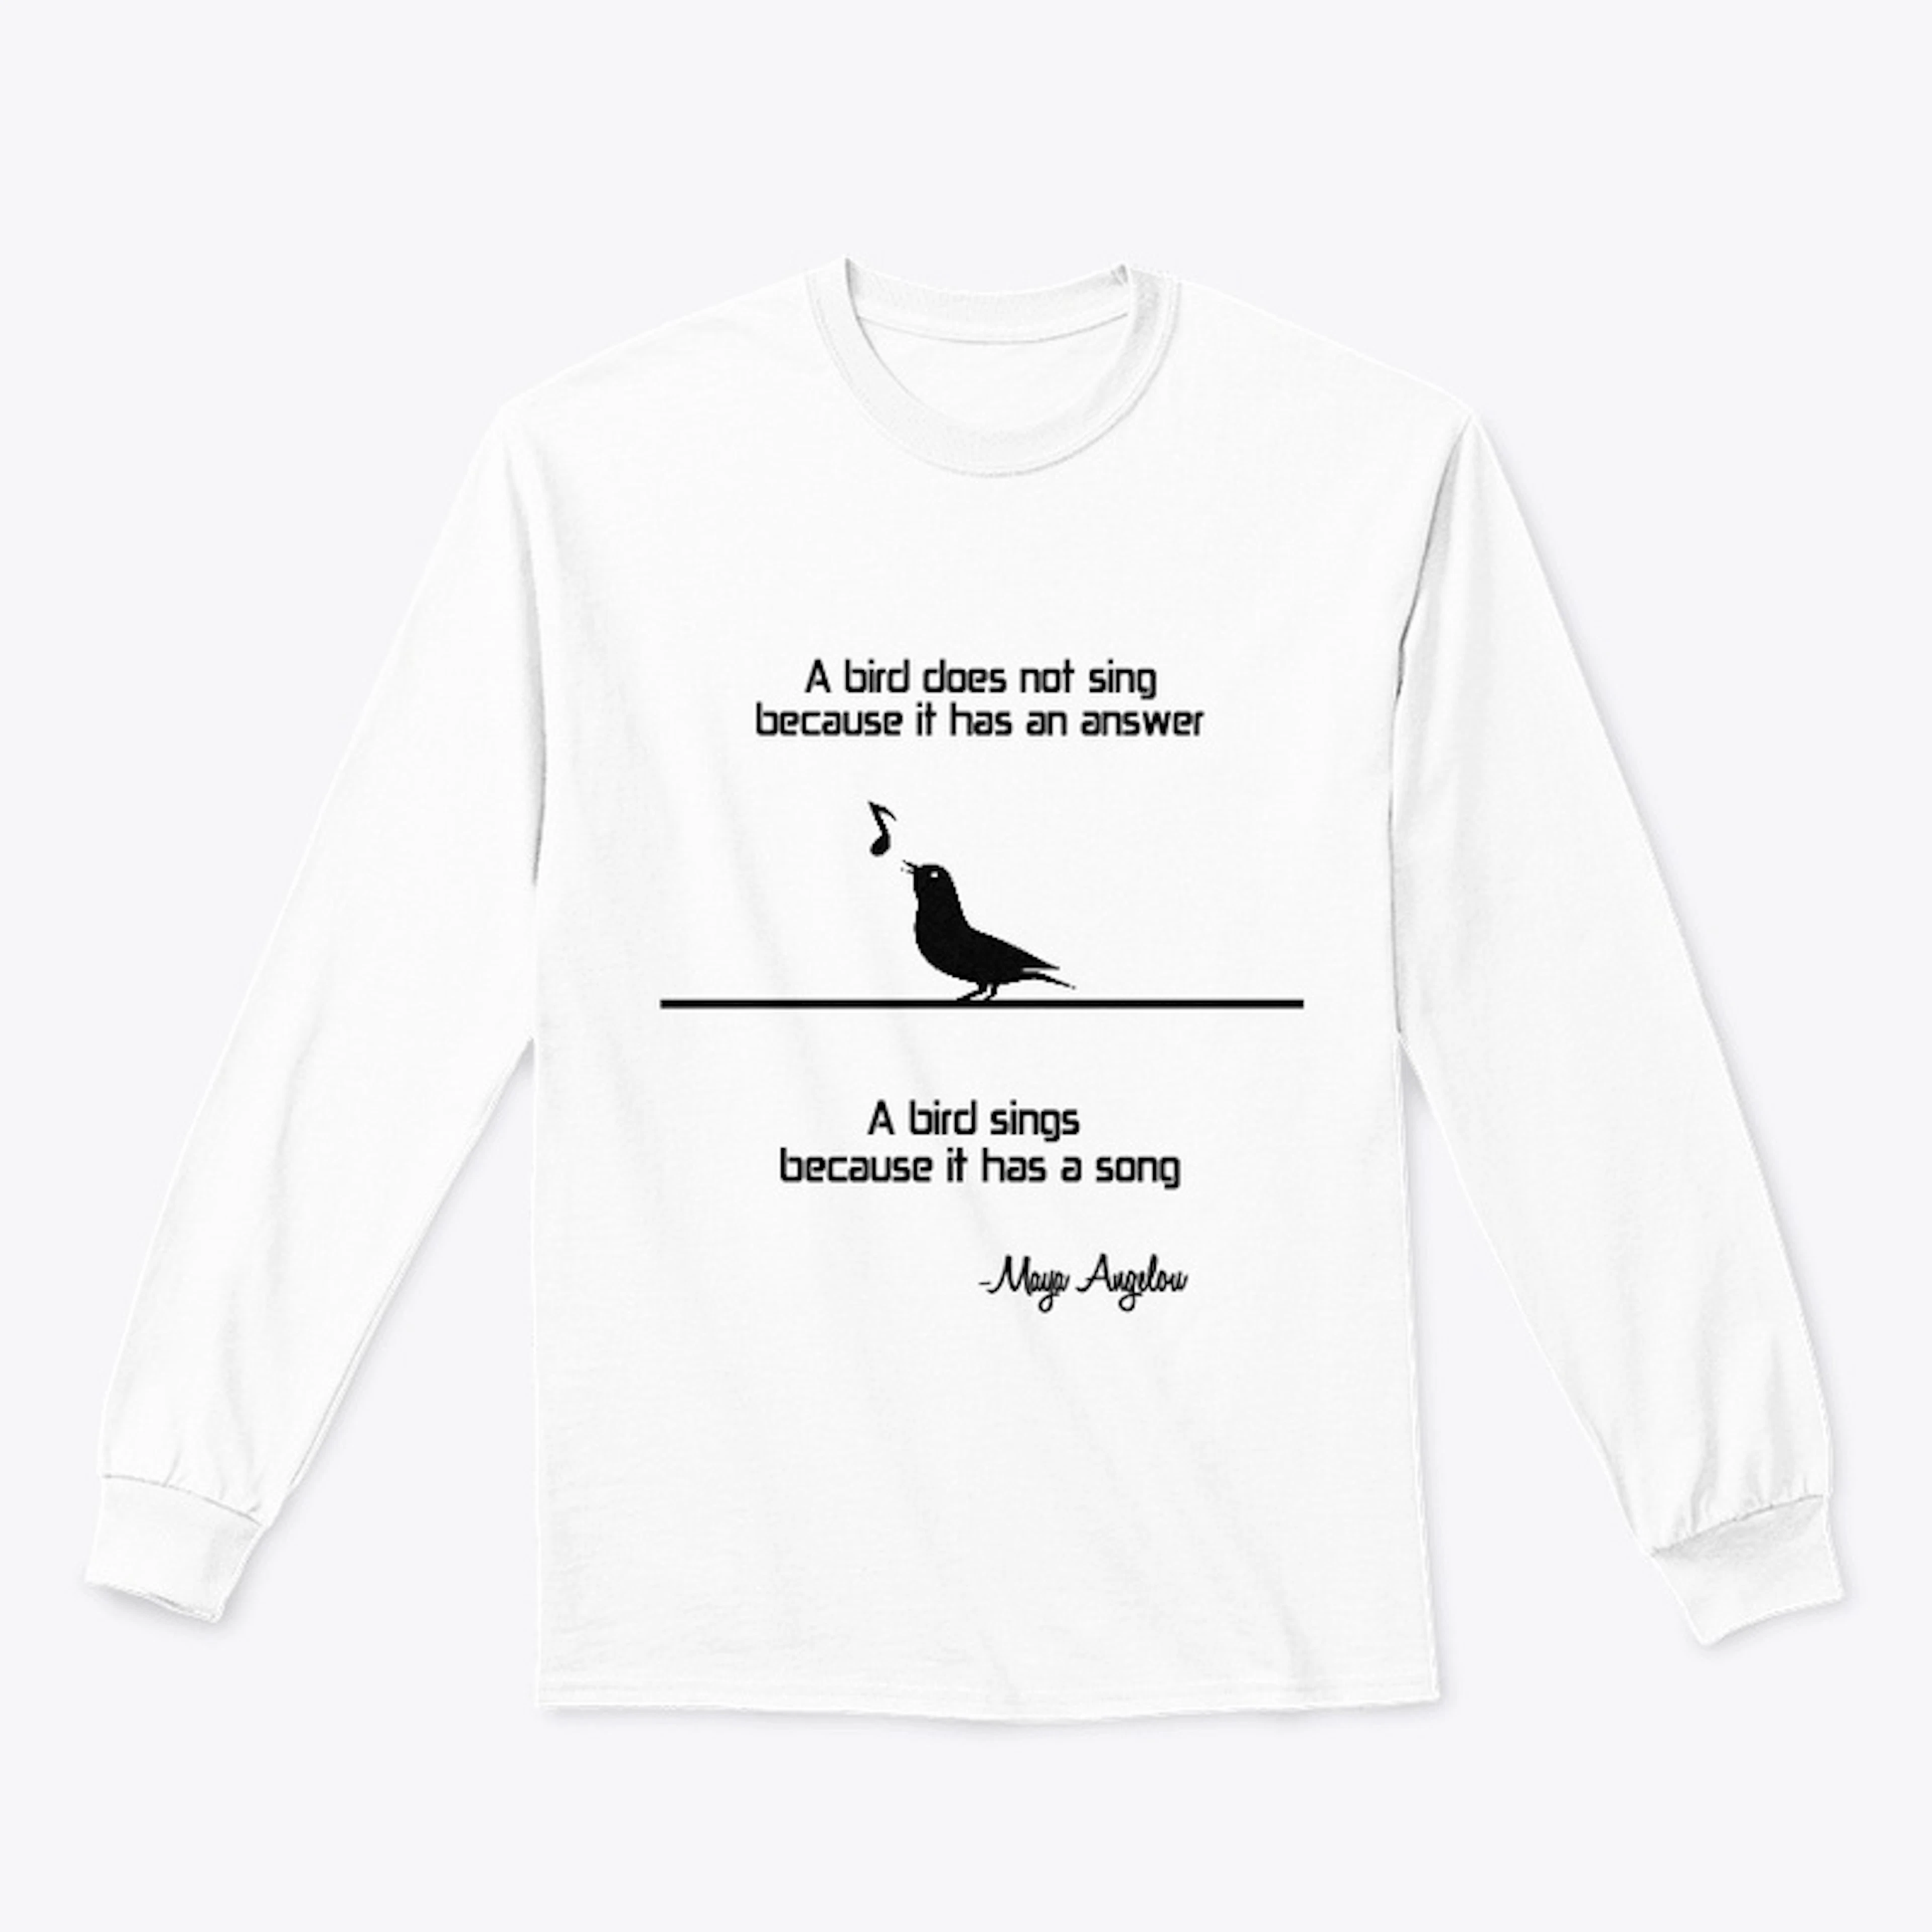 Why a bird sings